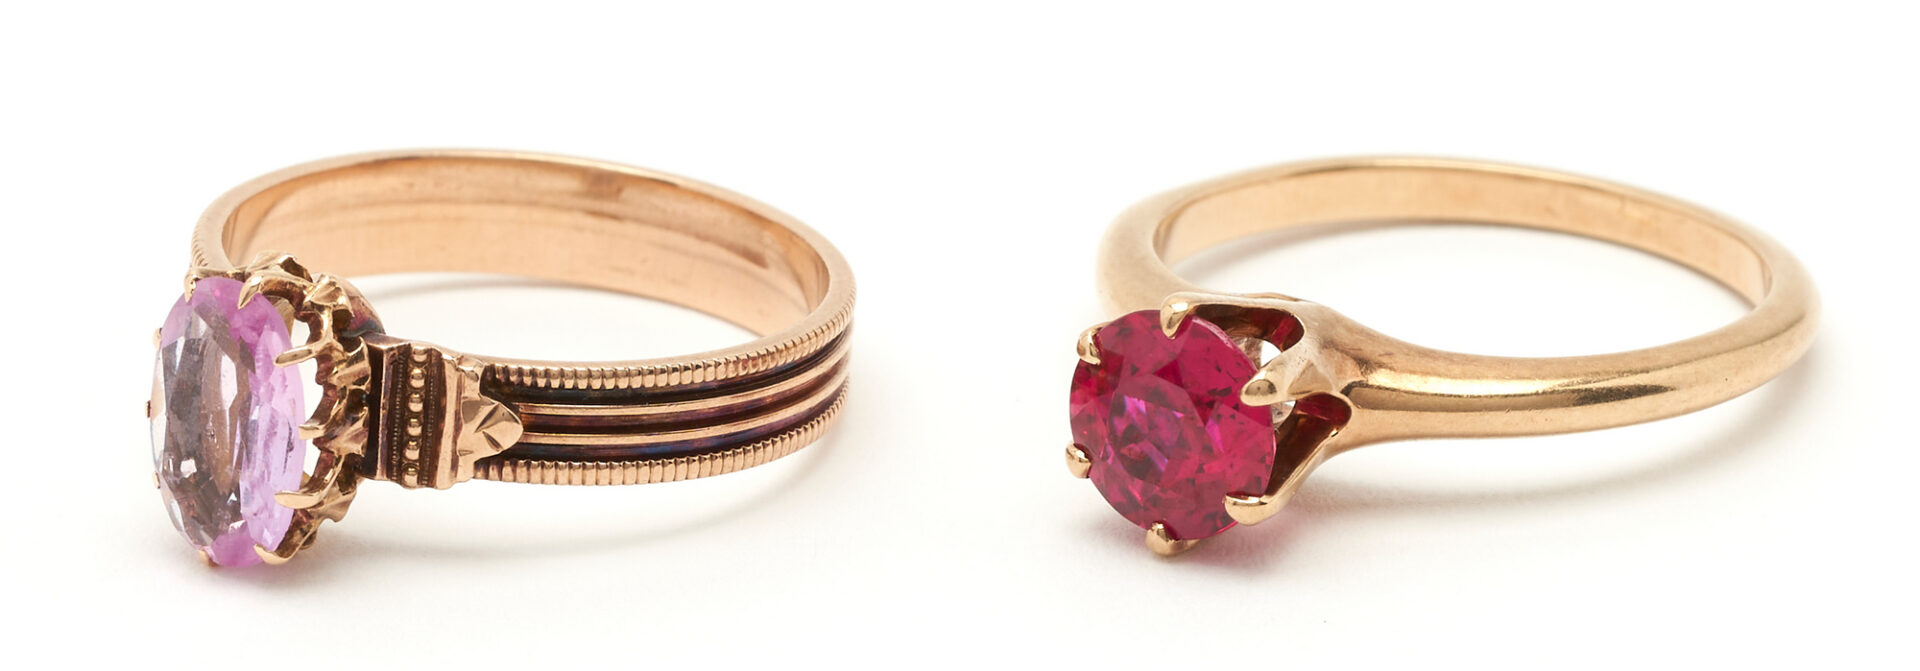 Lot 1184: 4 Ladies Gold & Gemstone Rings